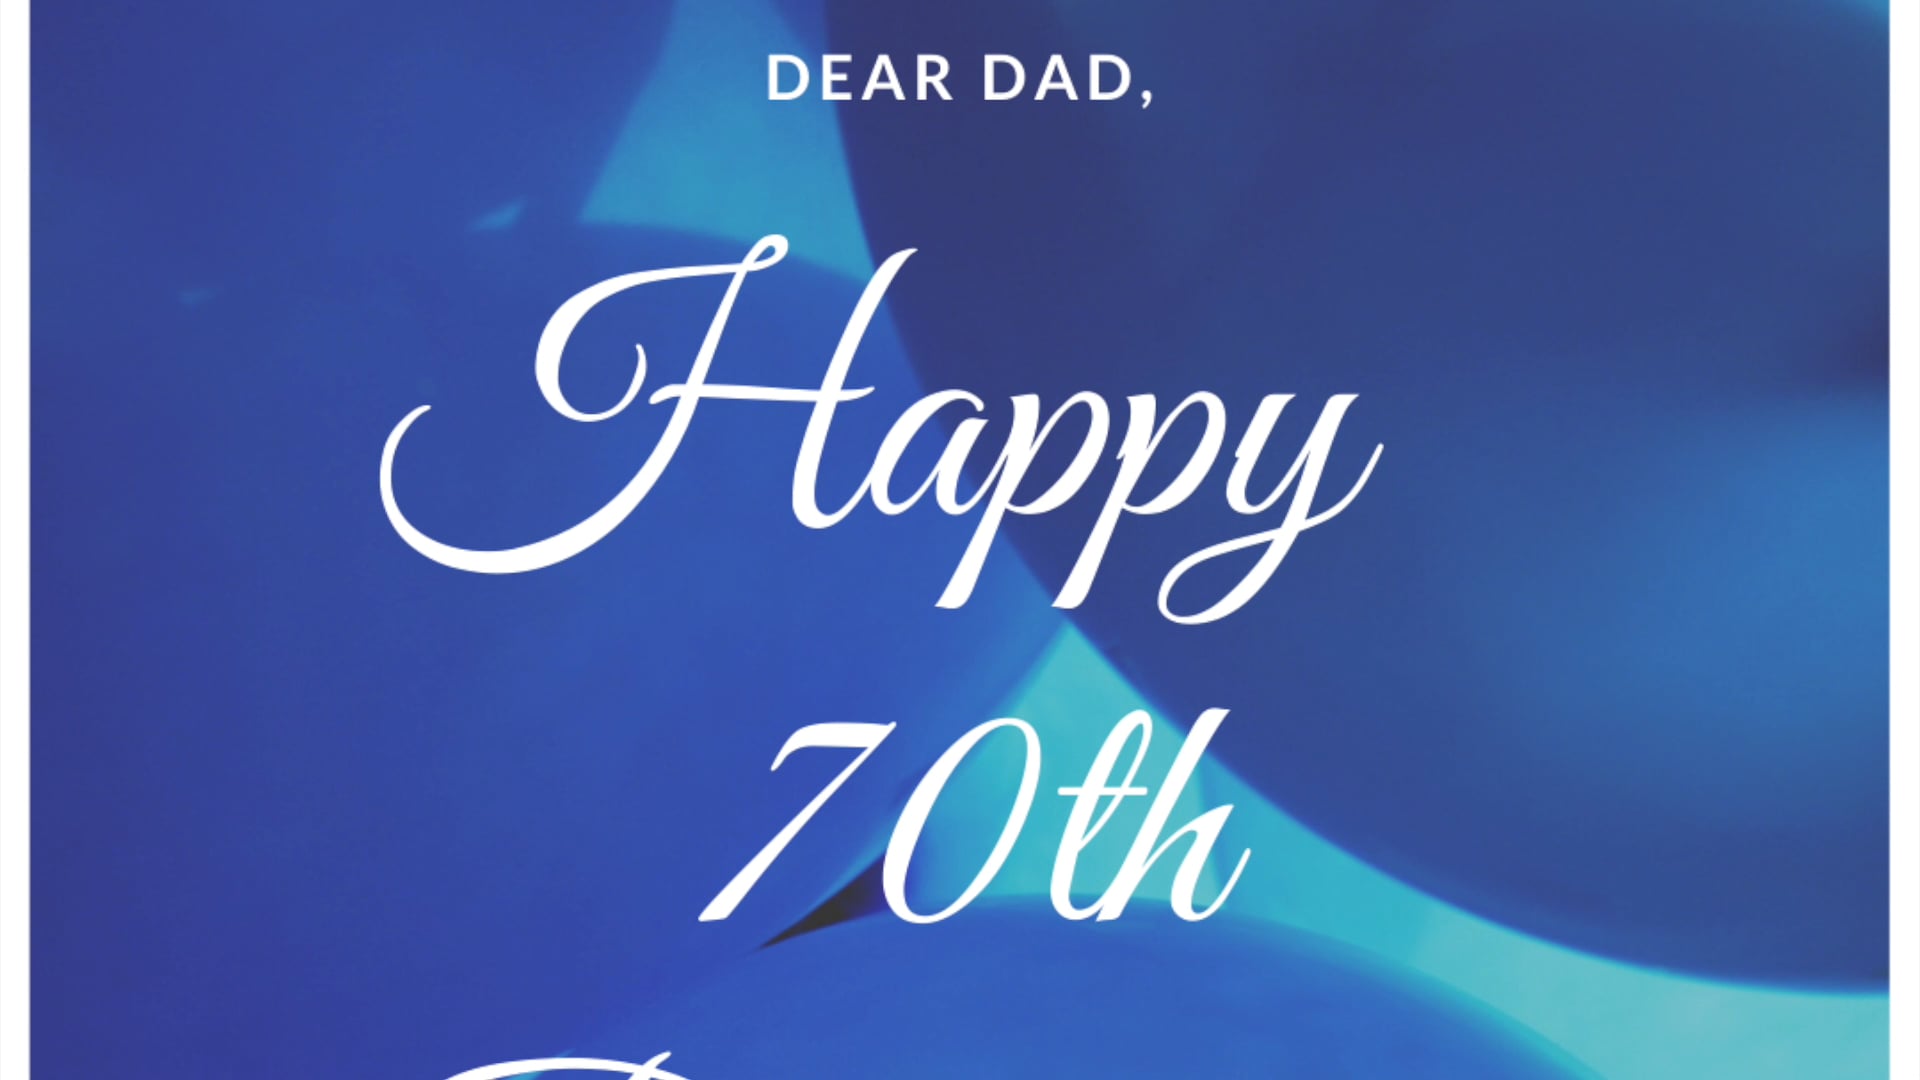 dad-s-70th-birthday-mp4-on-vimeo